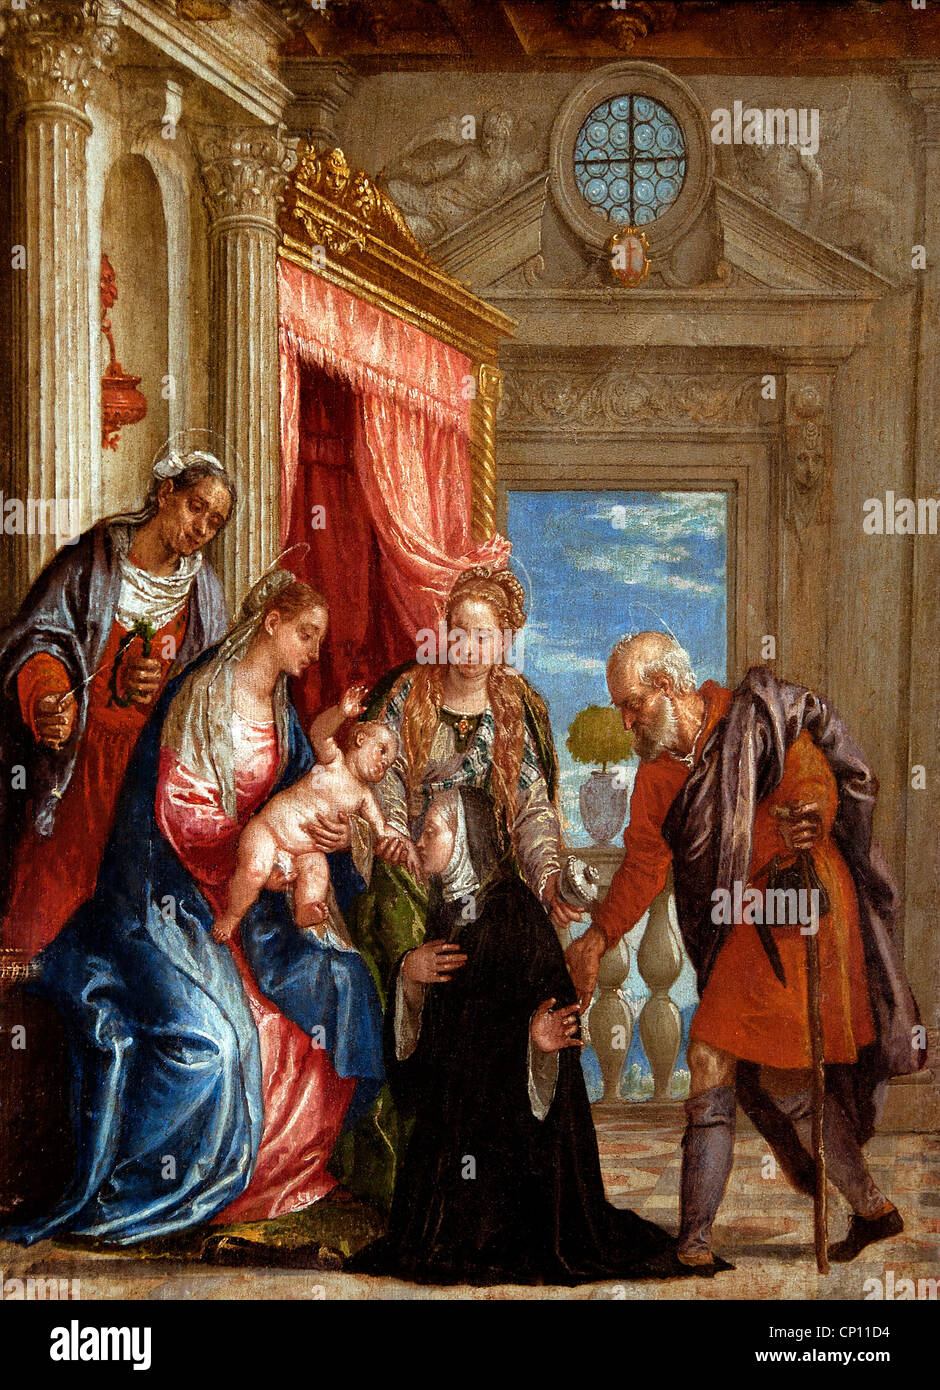 La Sainte Famille et trois saintes - The Holy Family and three holy 1580 Atelier de Paolo CALIARI, dit VÉRONÈSE 1528 -1588 Italy Stock Photo